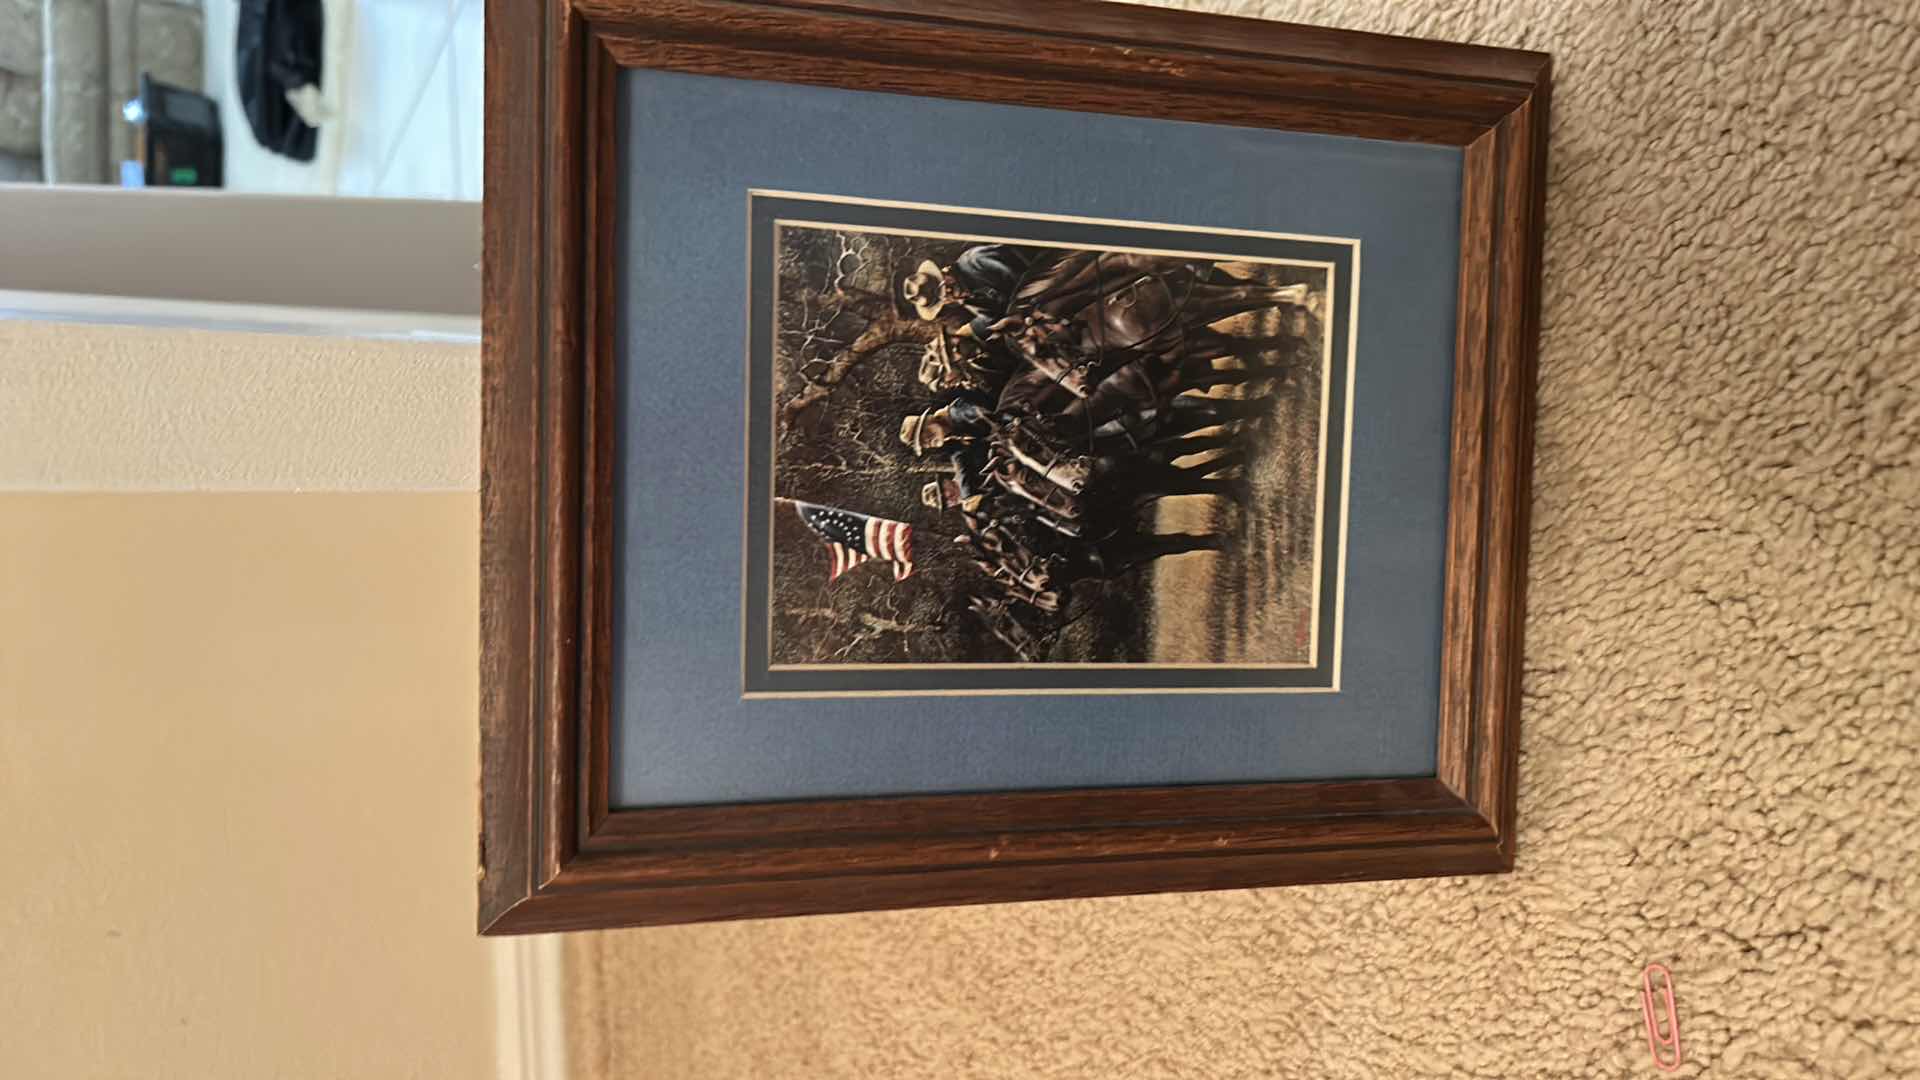 Photo 4 of 2 - 11“ x 9“ framed artwork, "Return of the Warriors" 1980 & "Waiting for the captain" 1980